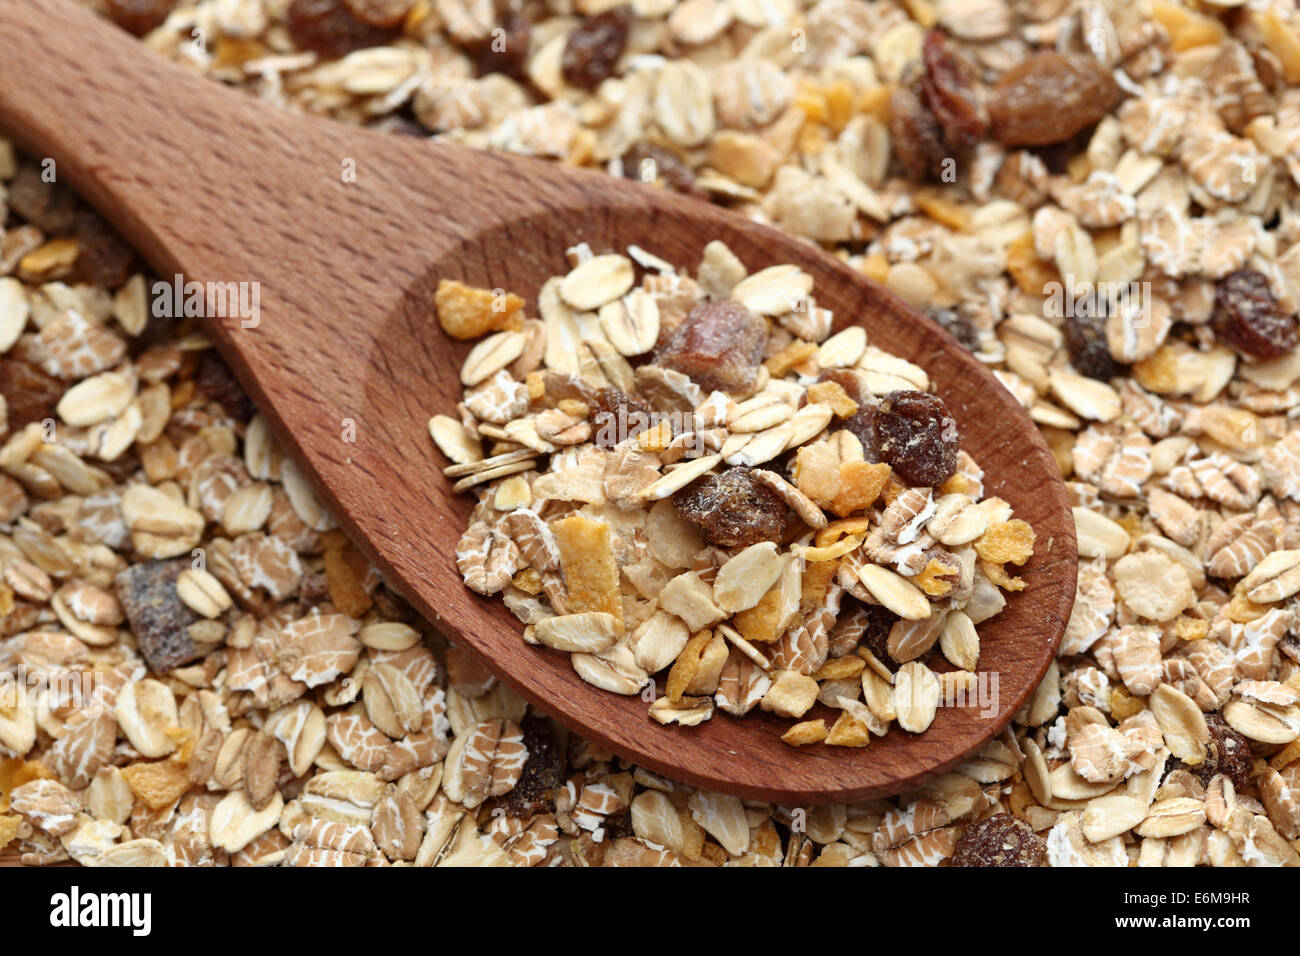 Muesli in a wooden spoon on muesli background. Closeup. Stock Photo